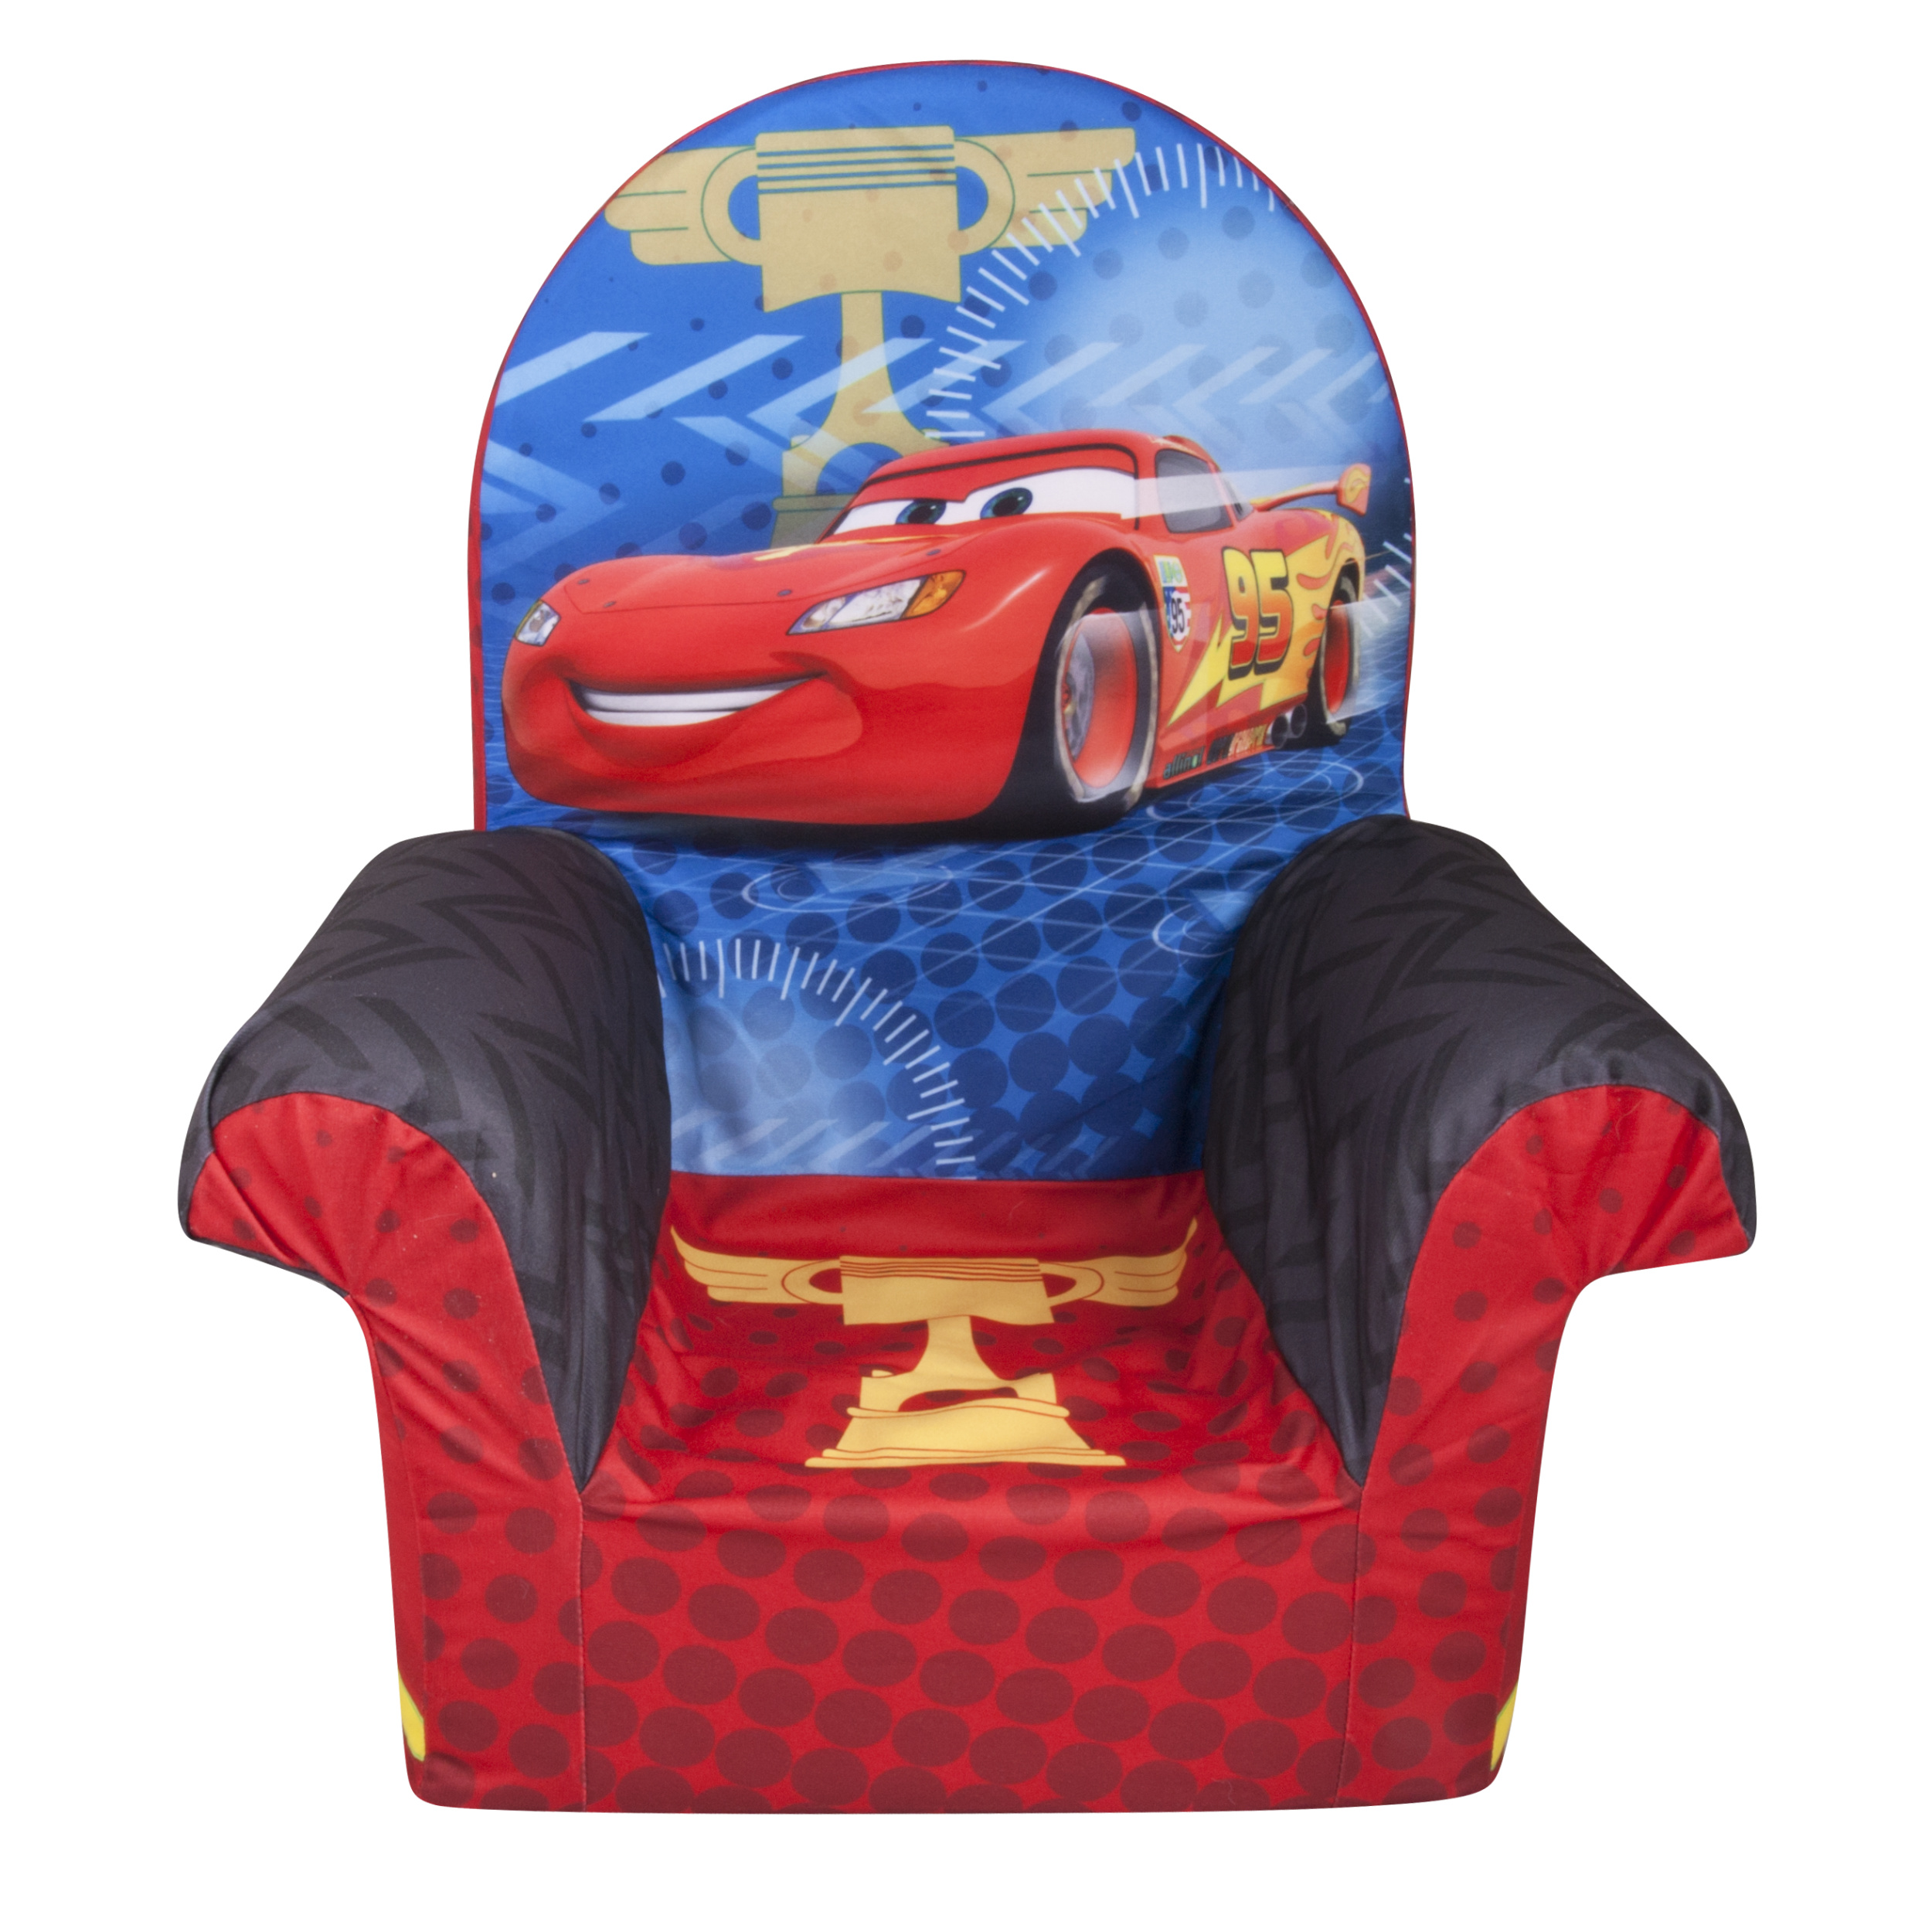 Marshmallow Furniture, Children's Foam High Back Chair, Disney/Pixar Cars 2 High Back Chair - image 1 of 4